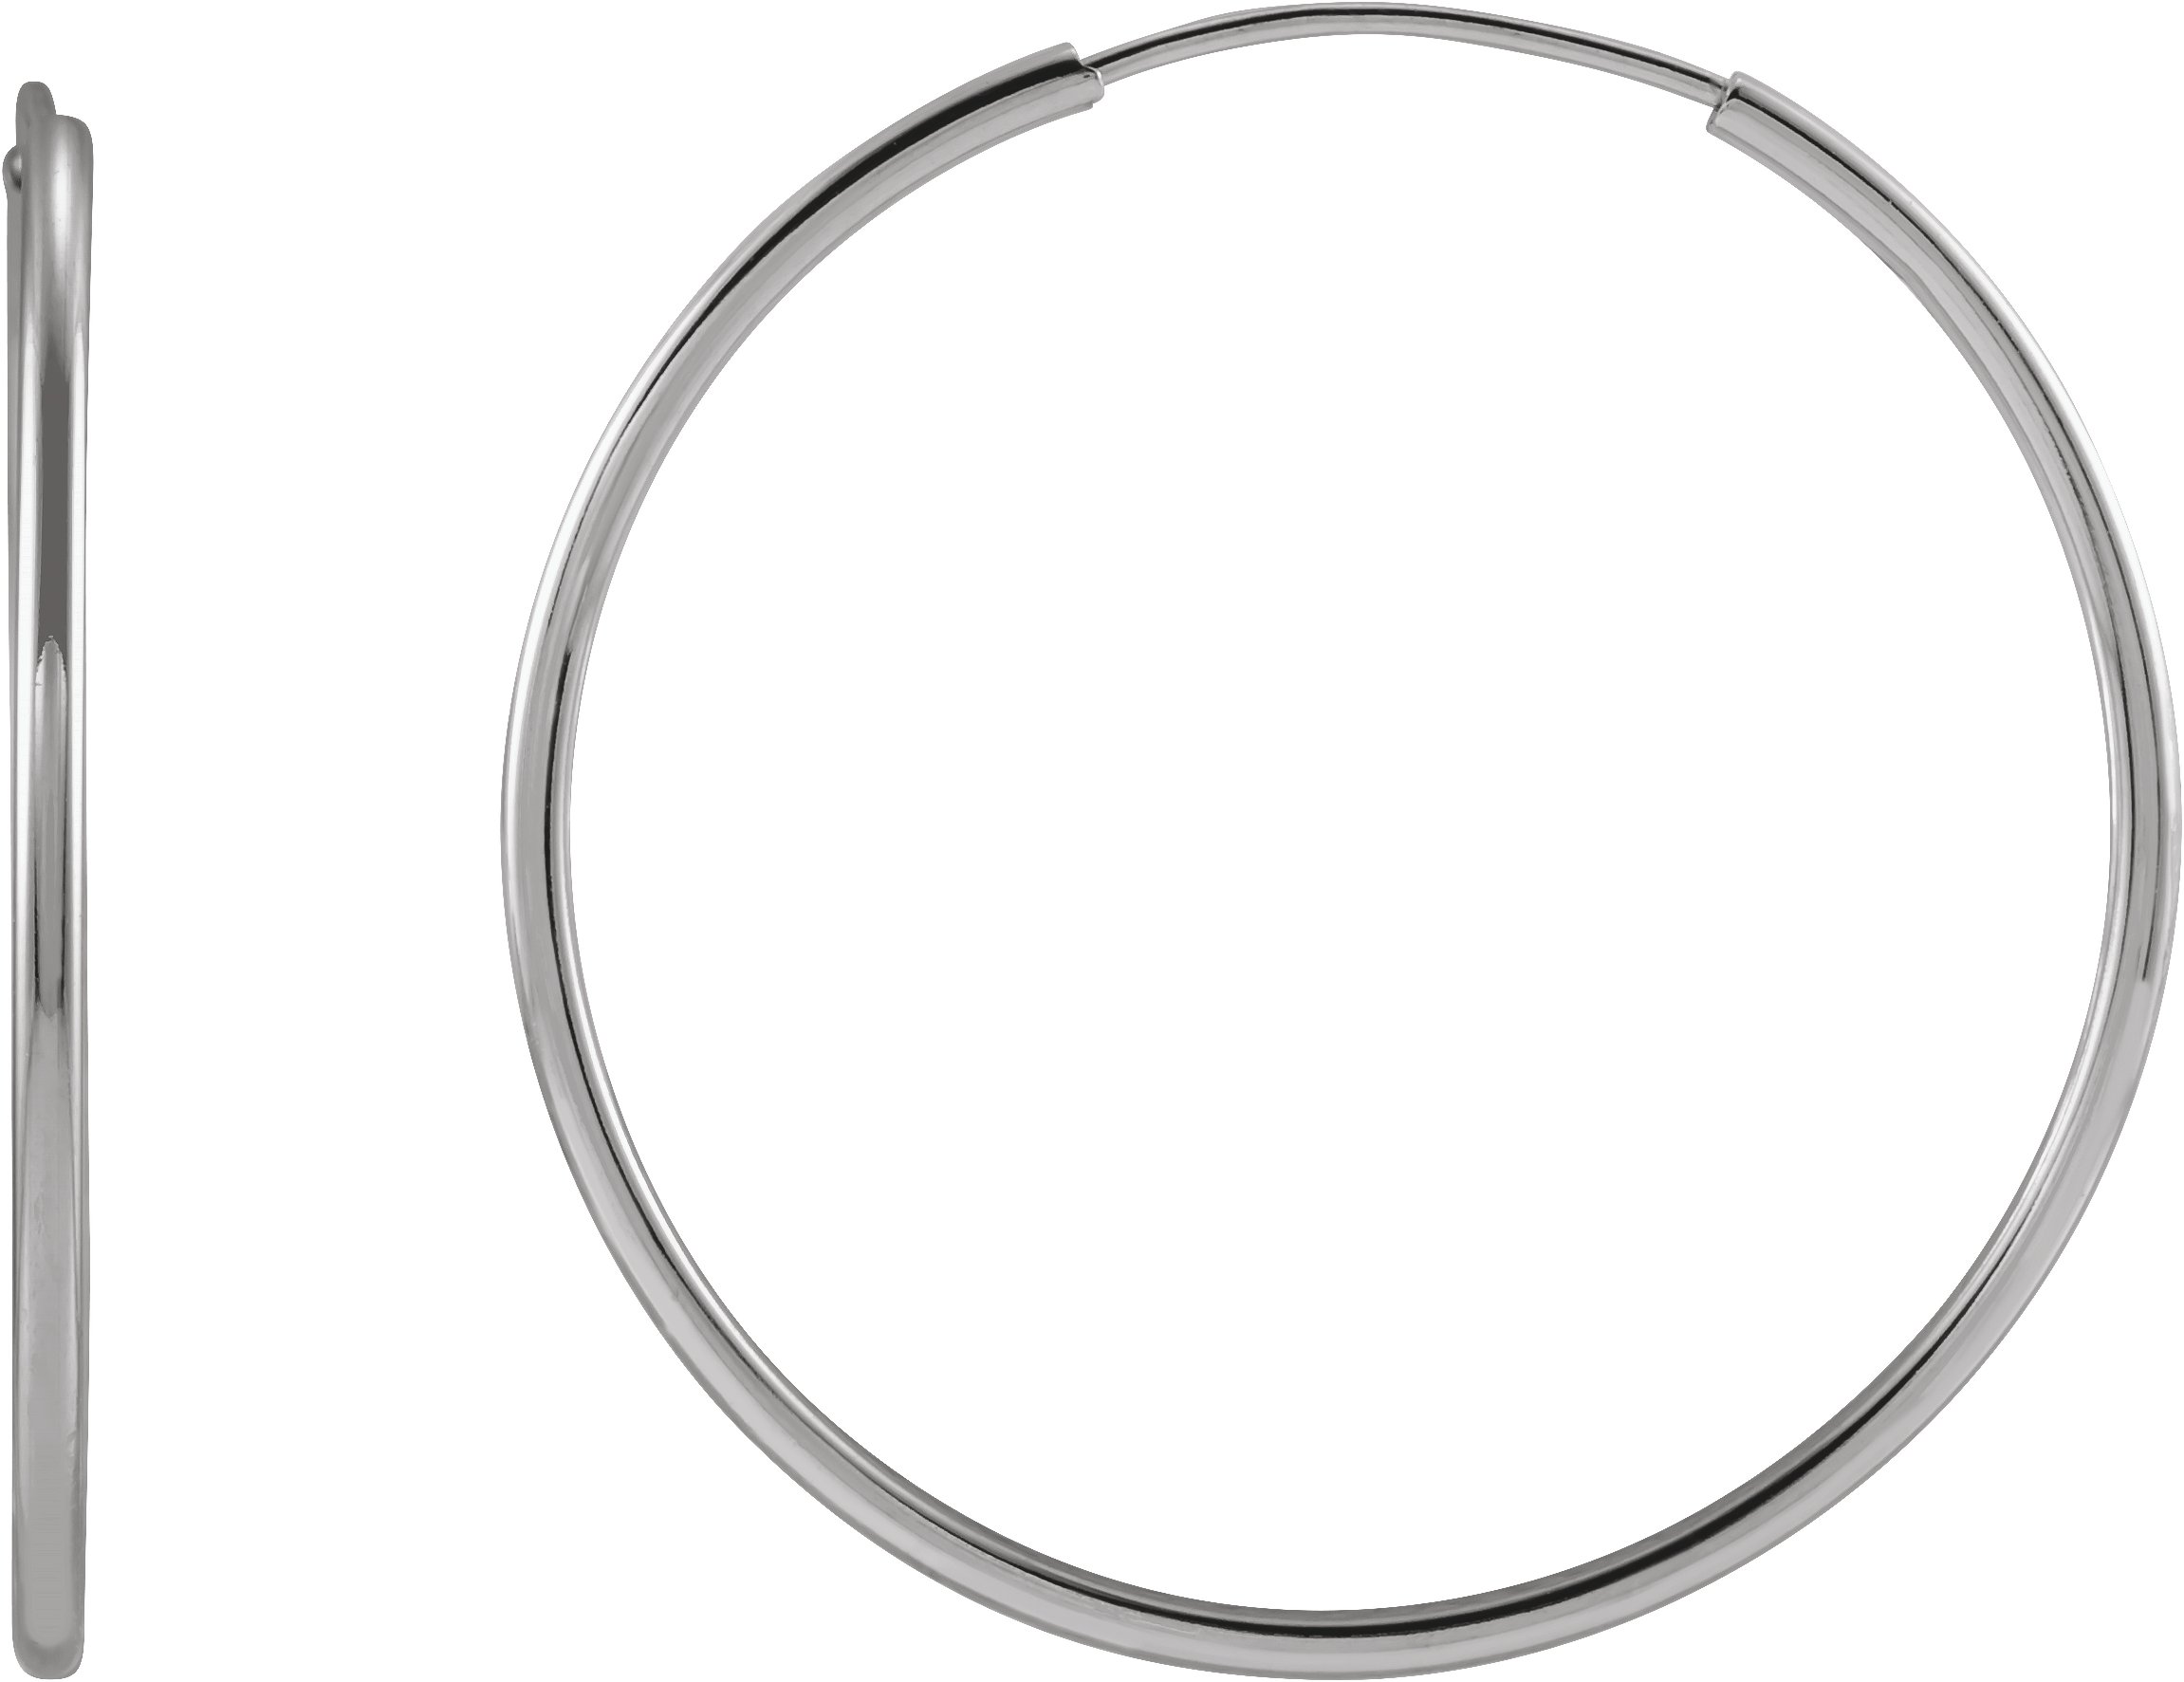 14K White 25 mm Flexible Endless Hoop Earrings Ref. 17393634